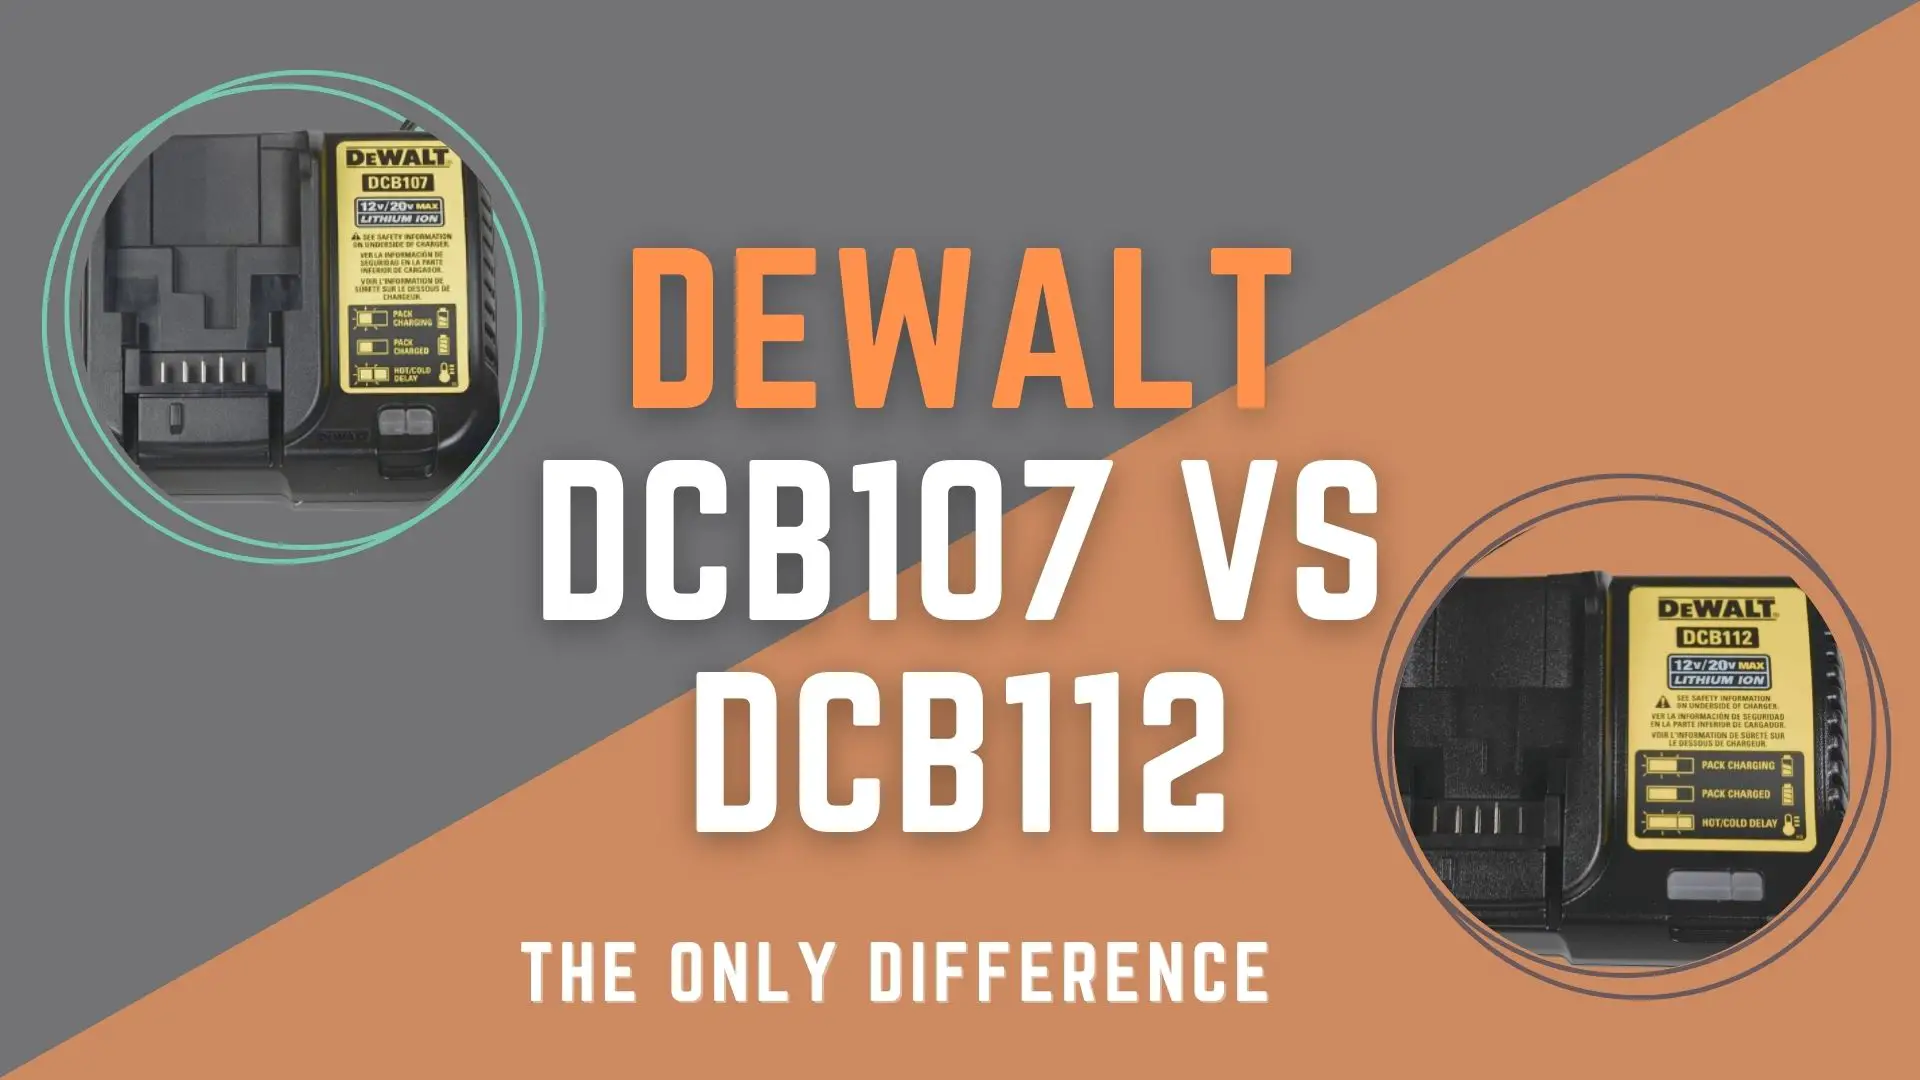 Dewalt dcb107 vs dcb112